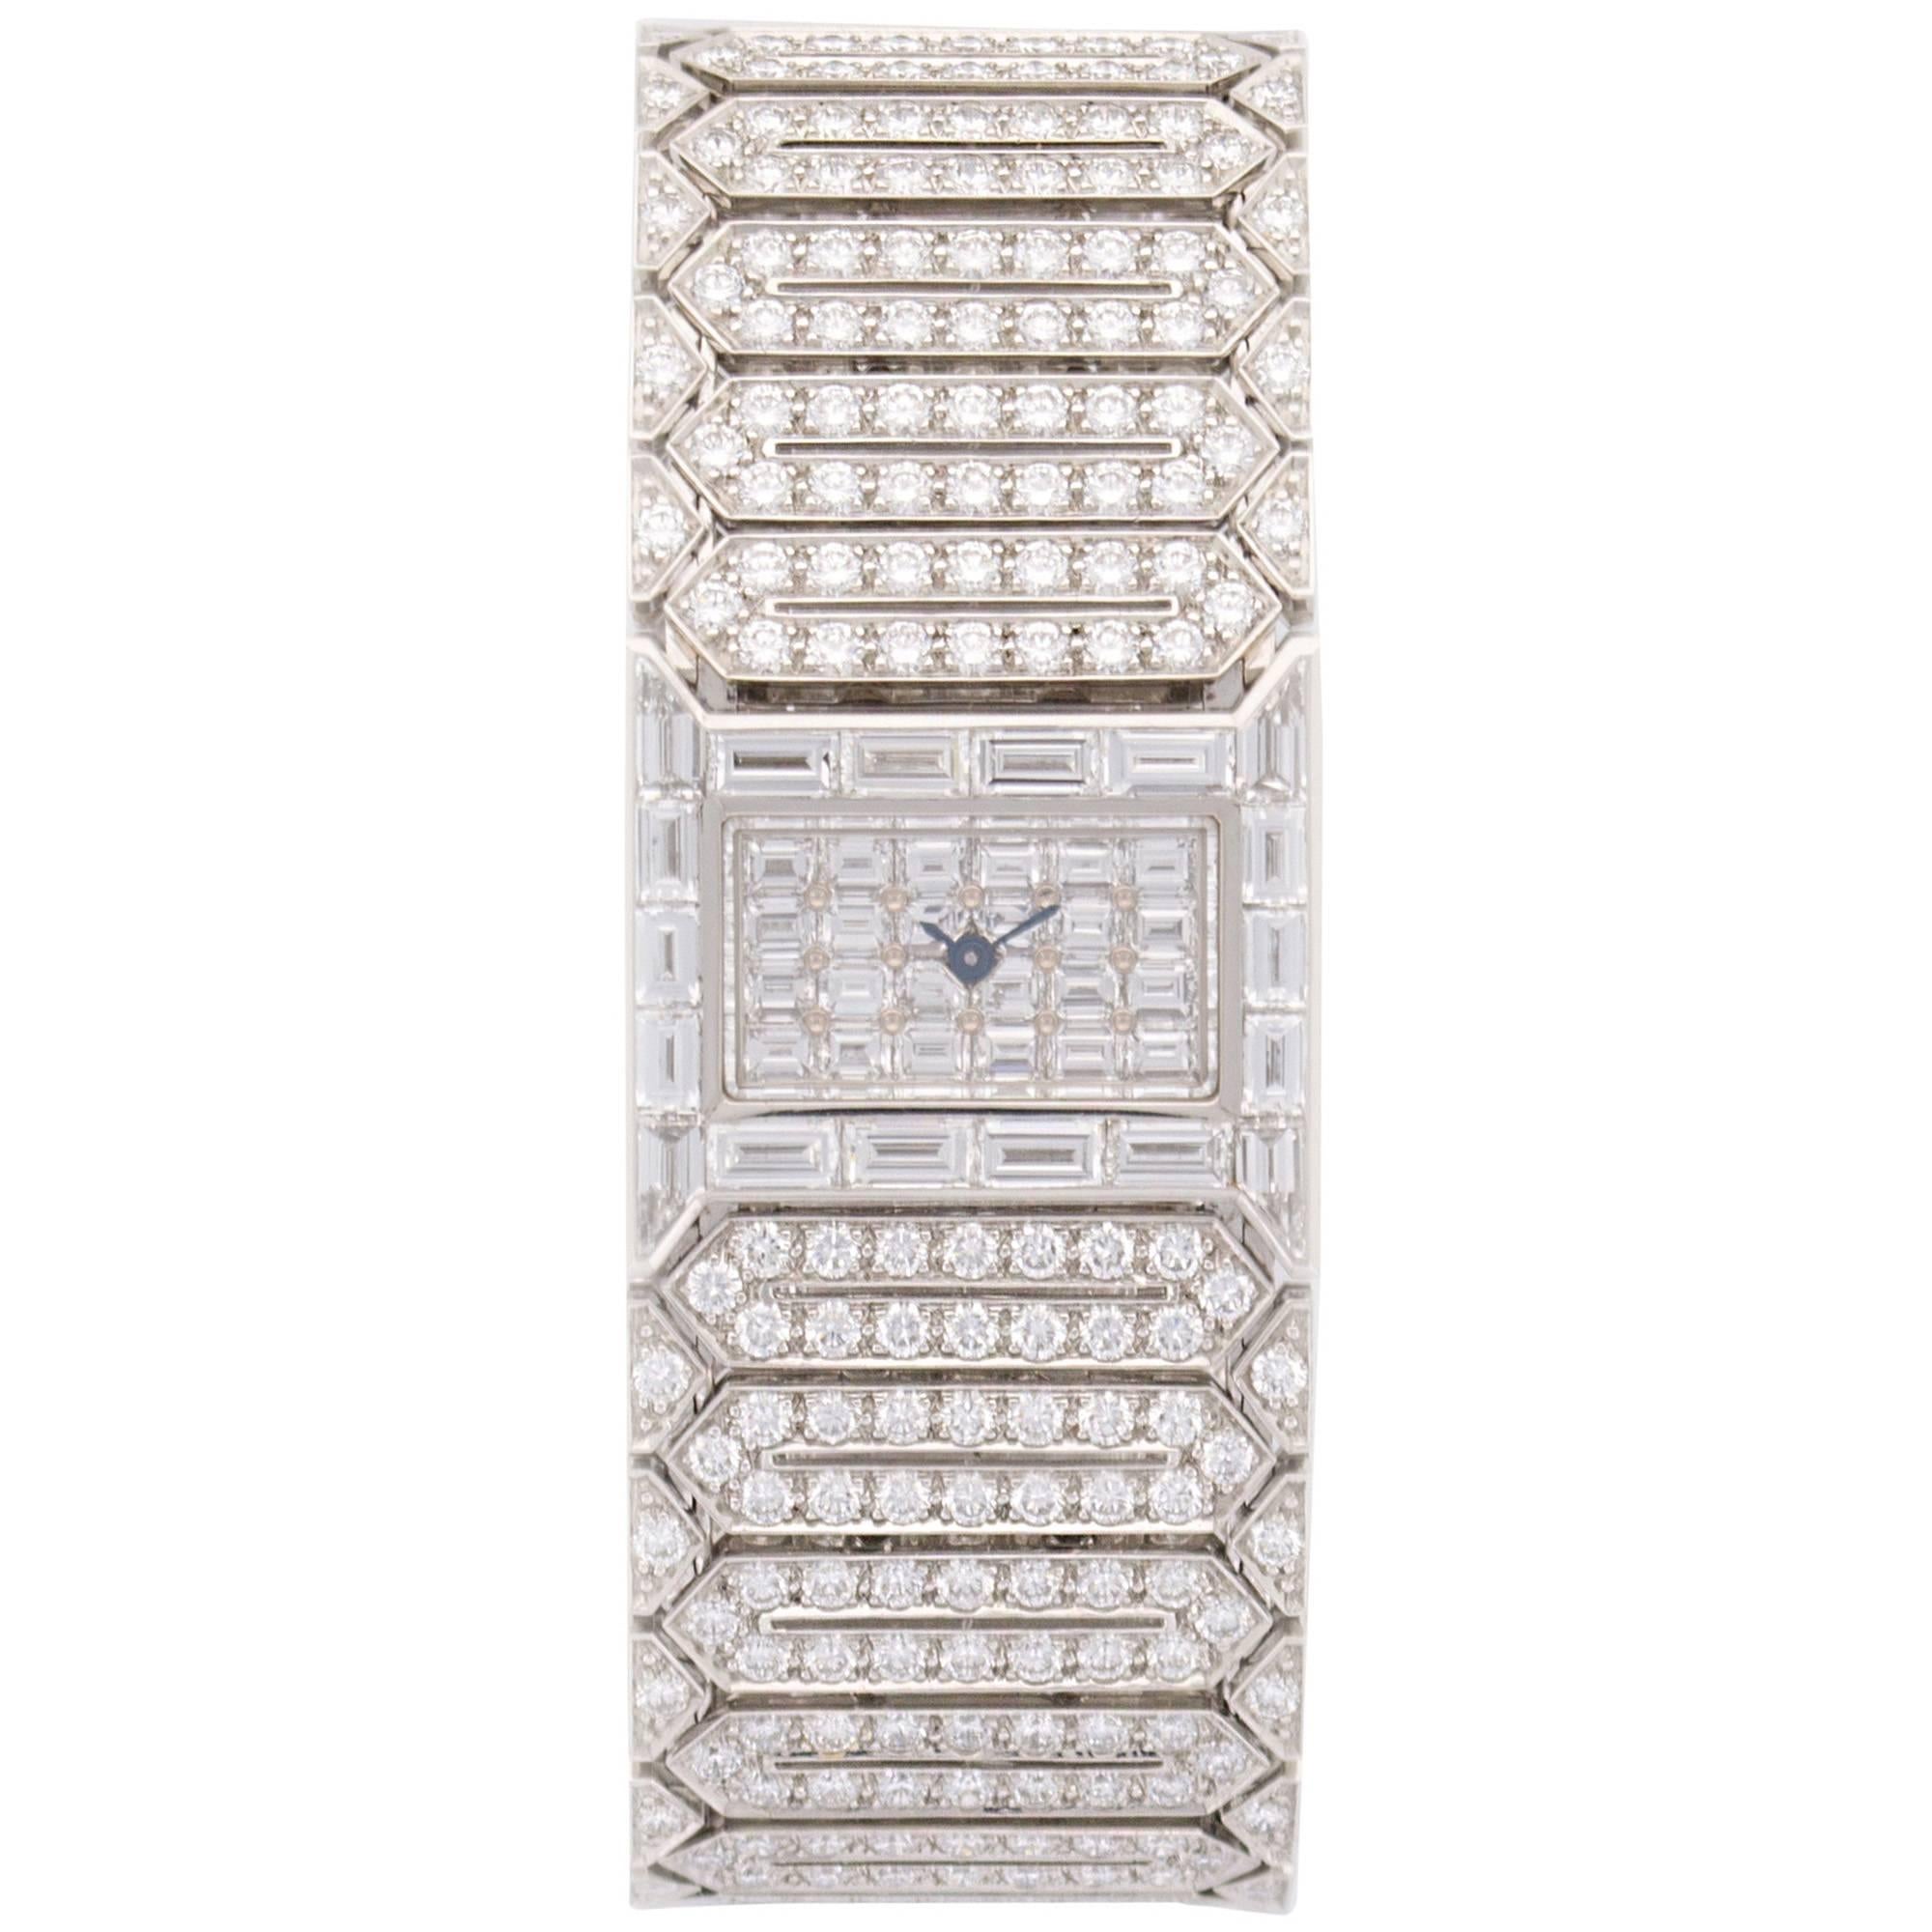 A Lady's Platinum Cartier Wide Bracelet Full Diamond Wristwatch